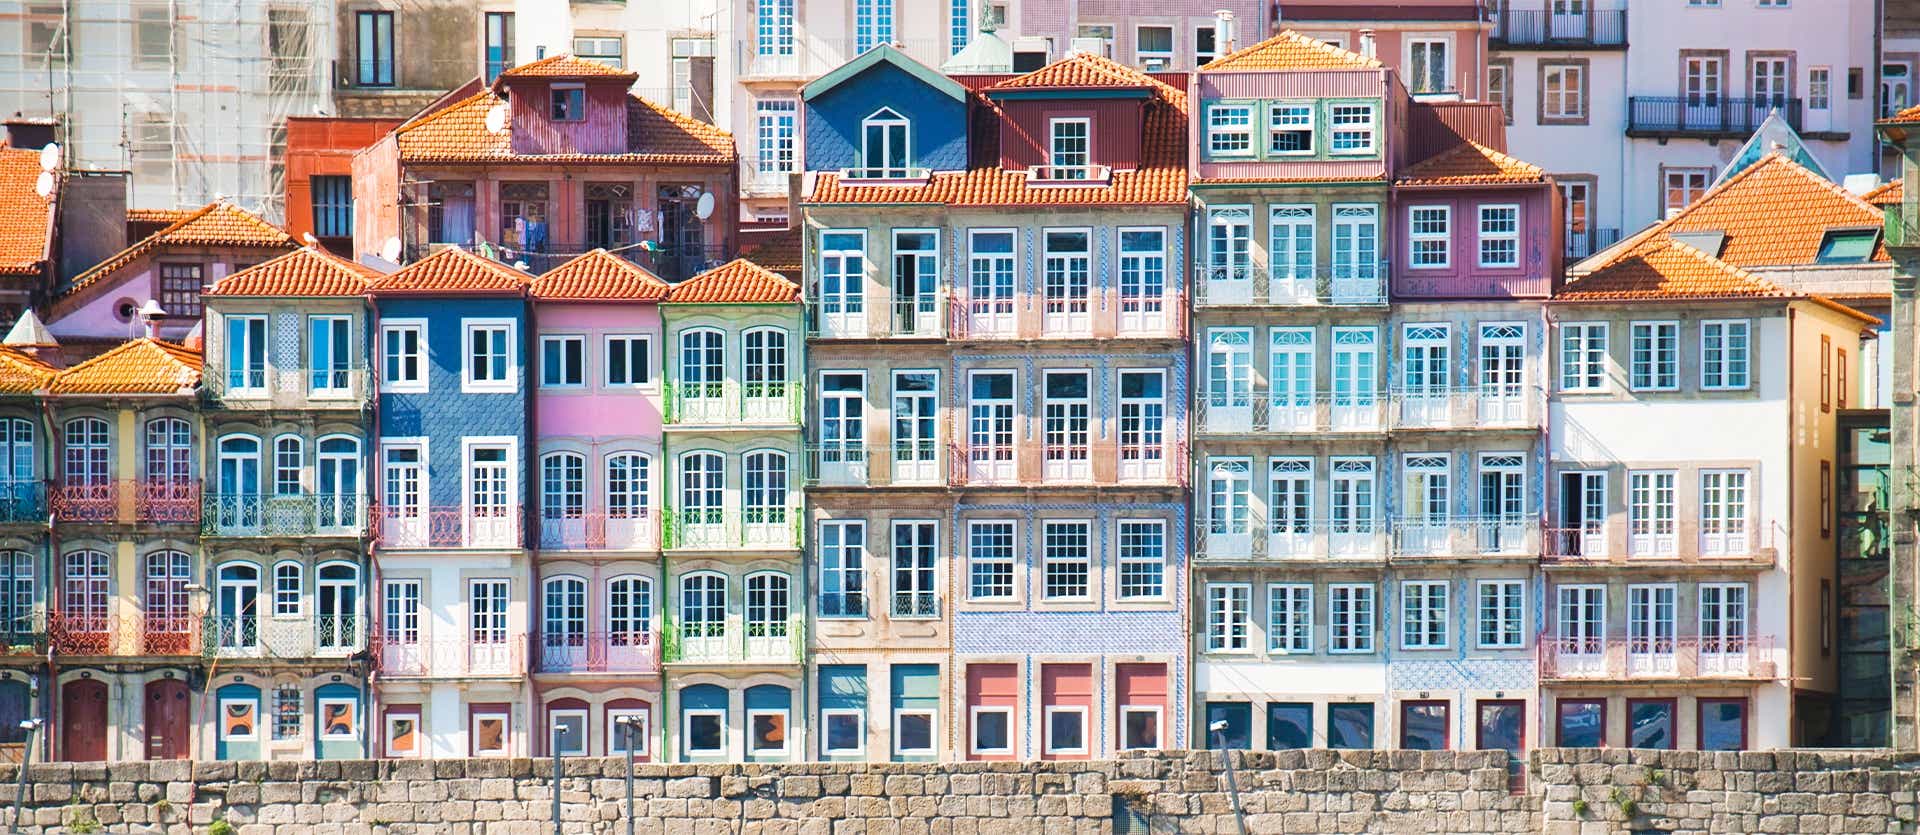 Colorful Houses <span class="iconos separador"></span> Porto <span class="iconos separador"></span> Portugal